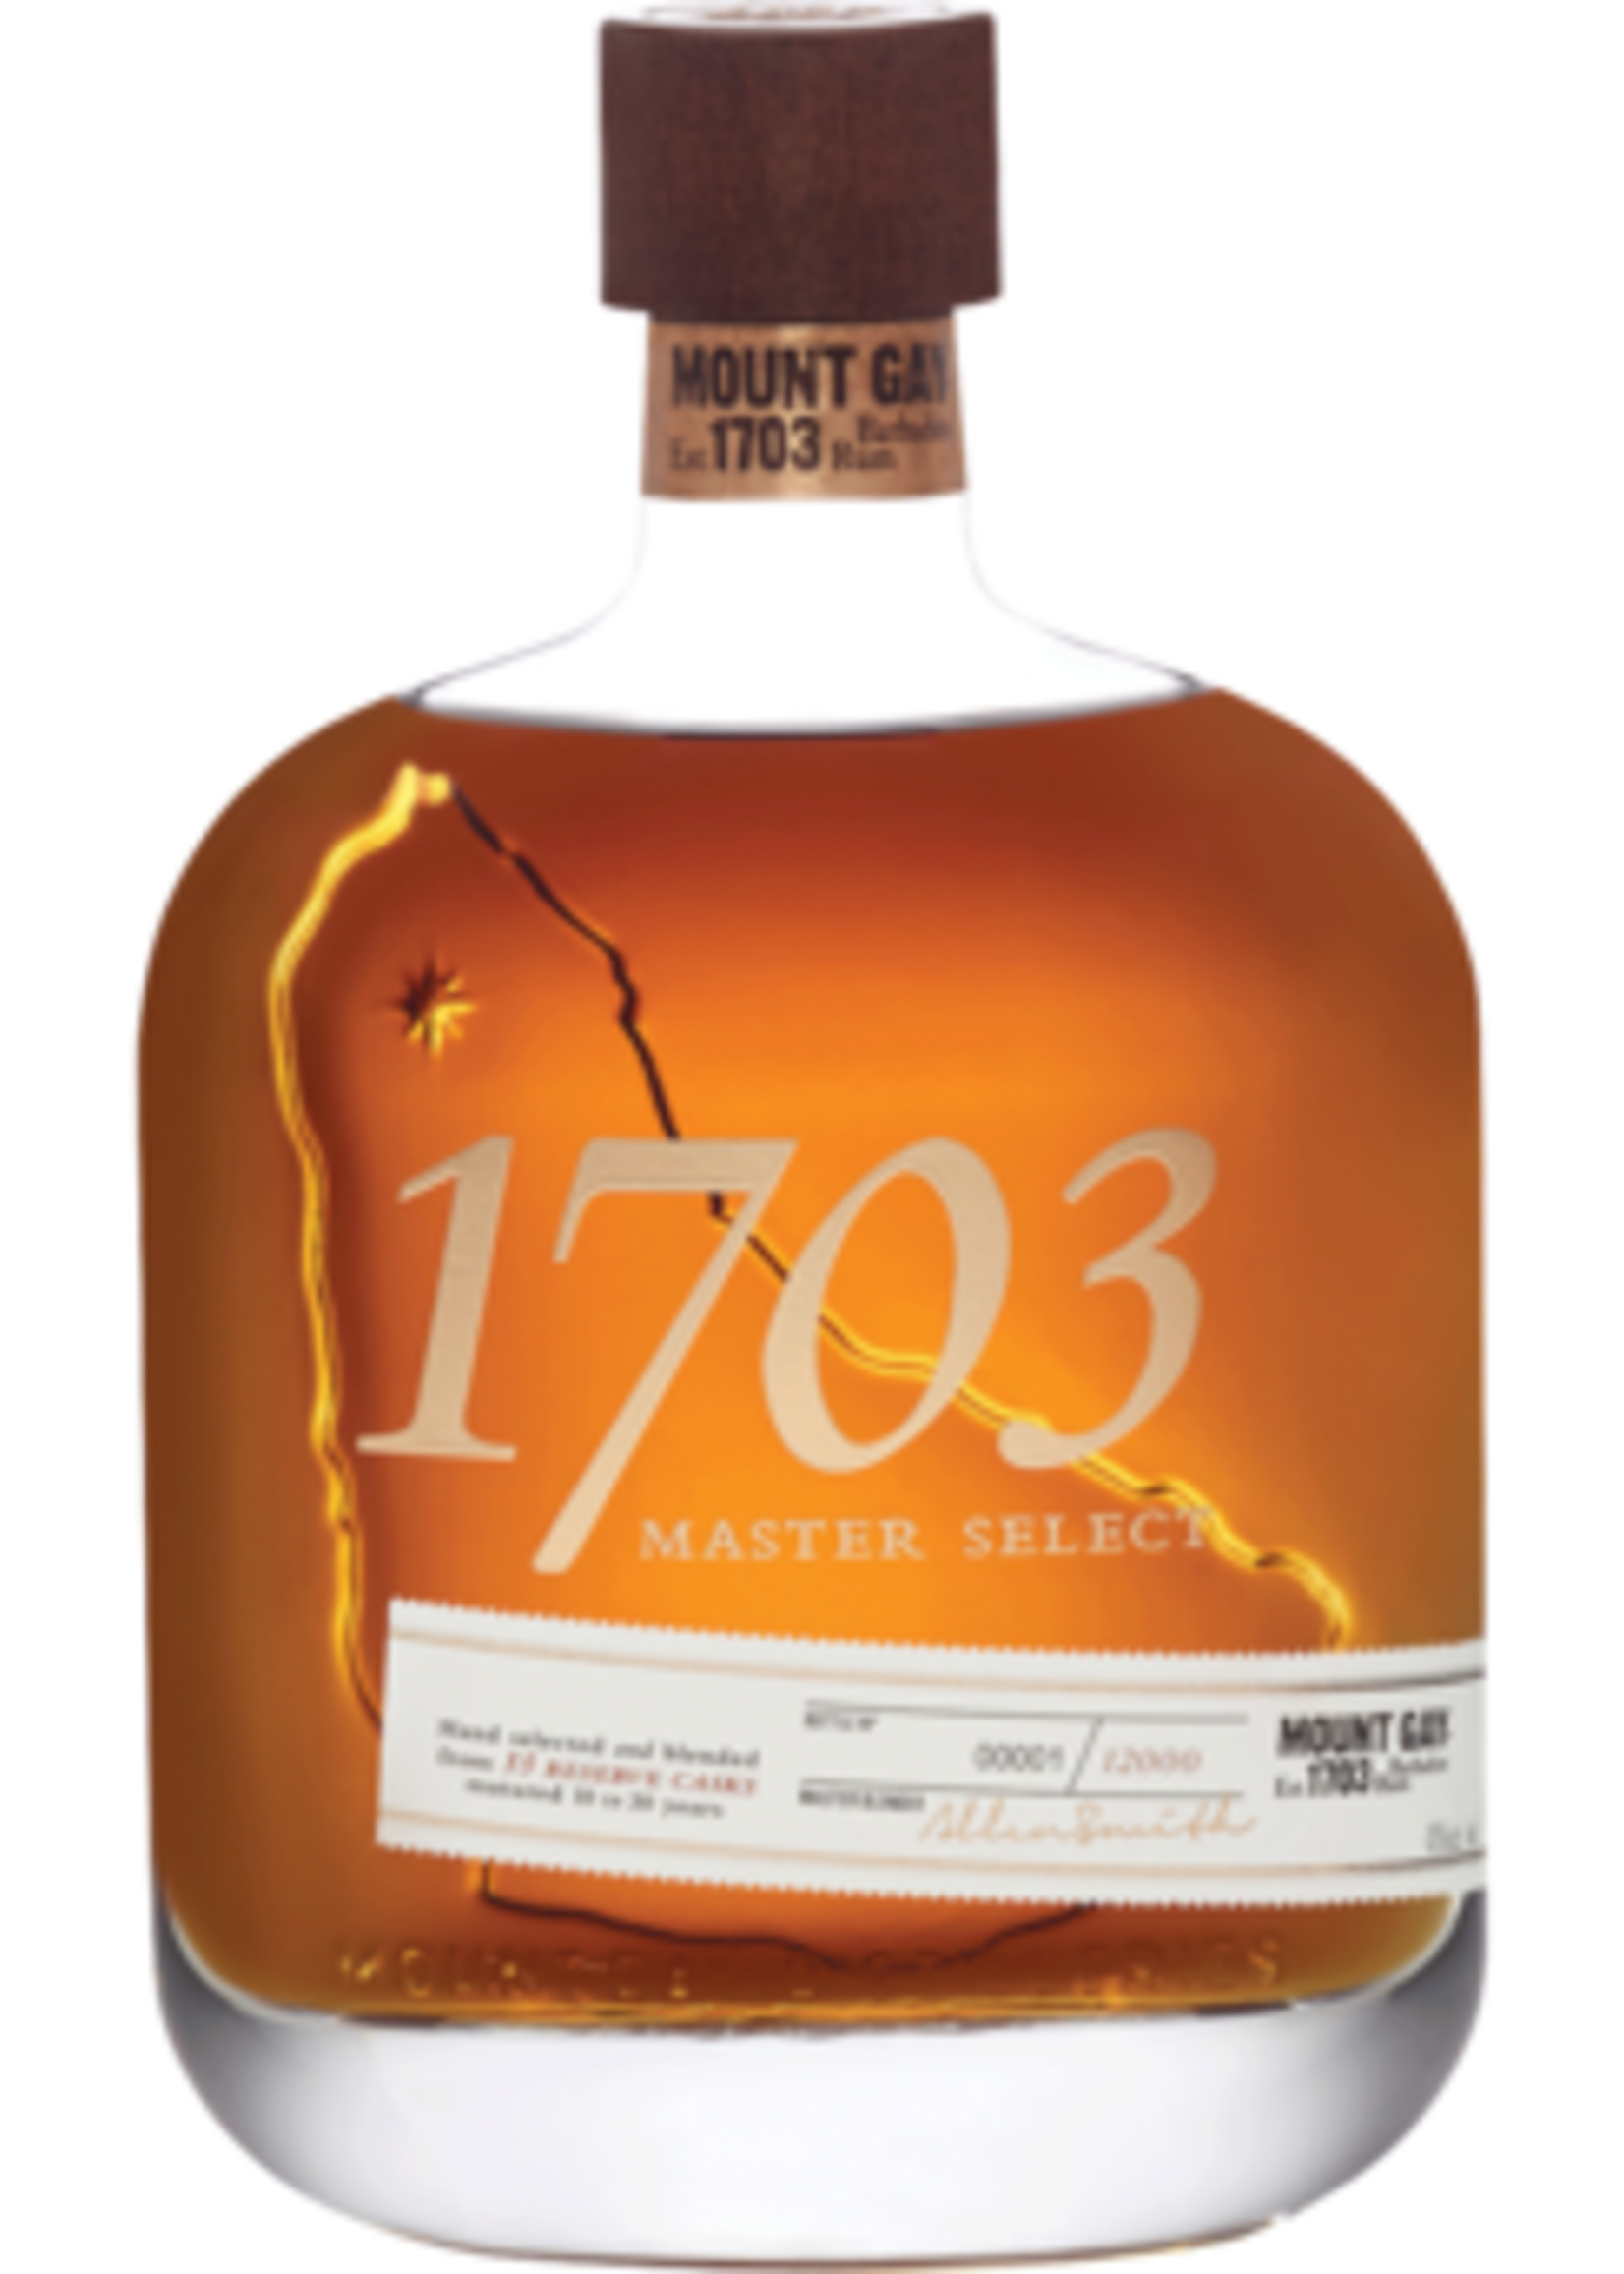 Mount Gay 1703 Master Select